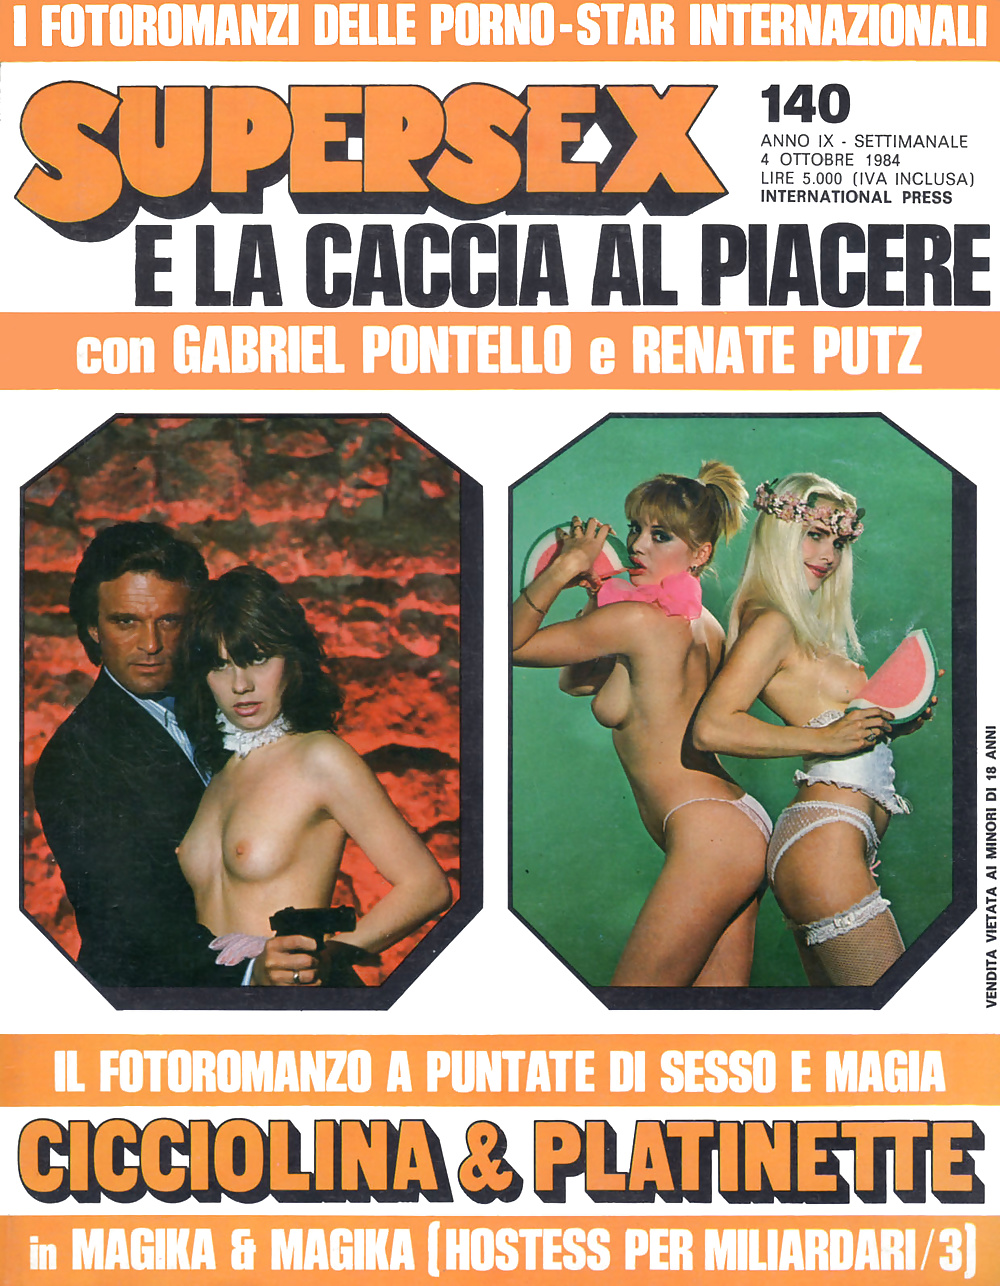 Gabriel Pontello SuperSex adult magazine covers (11/63)